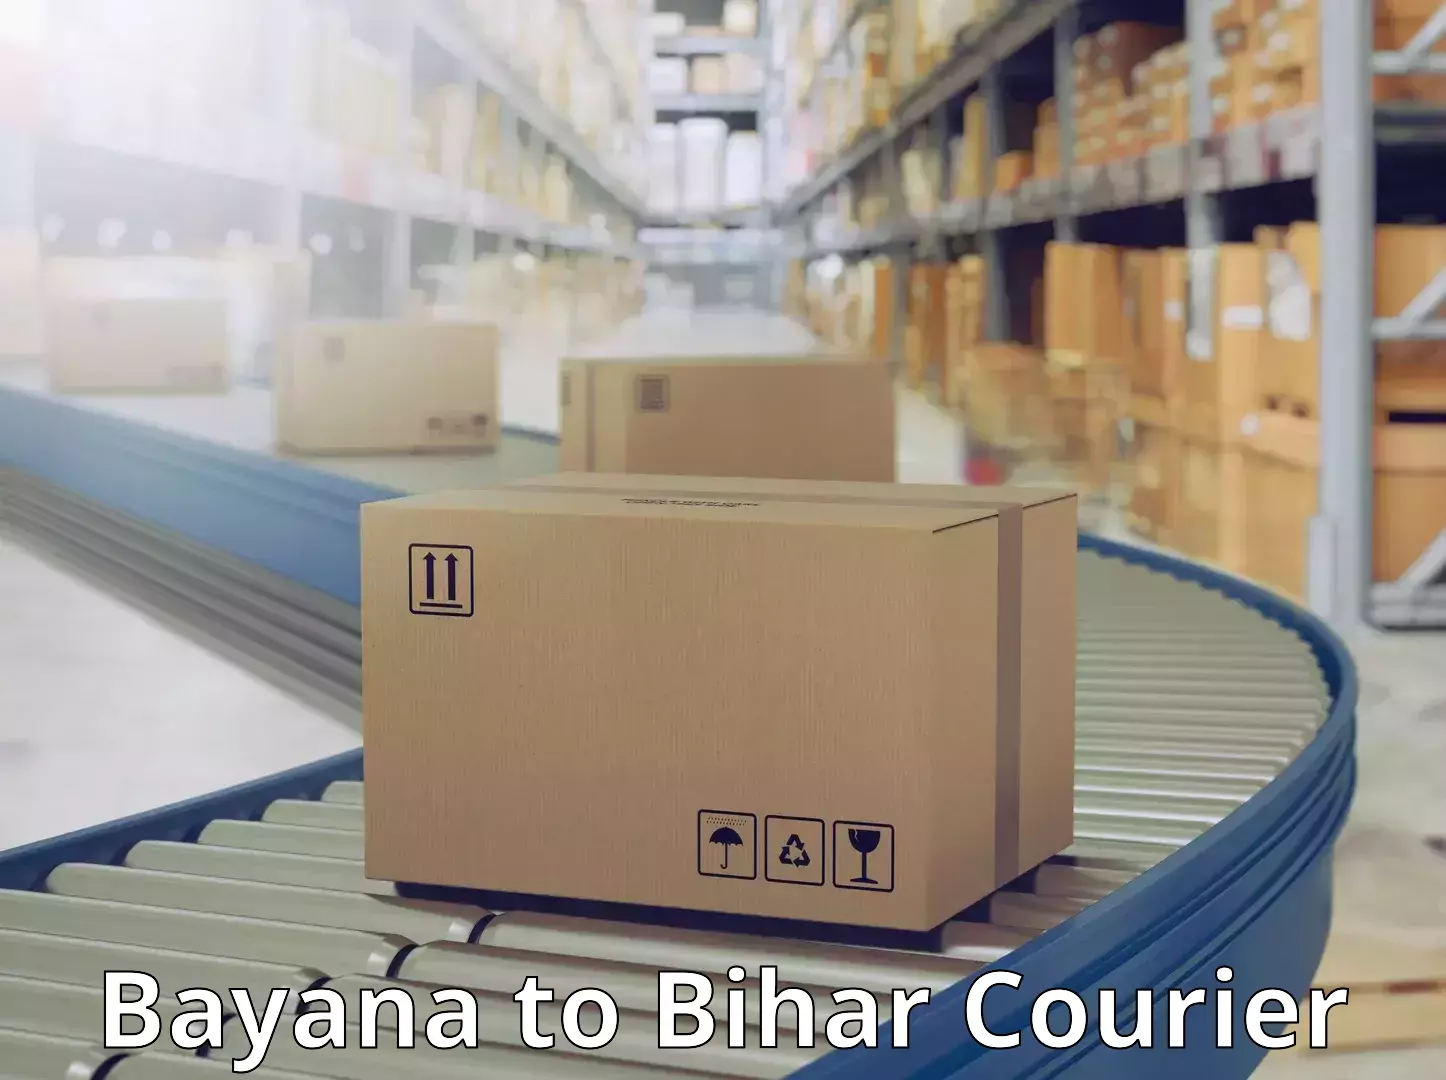 Digital courier platforms Bayana to Bihar